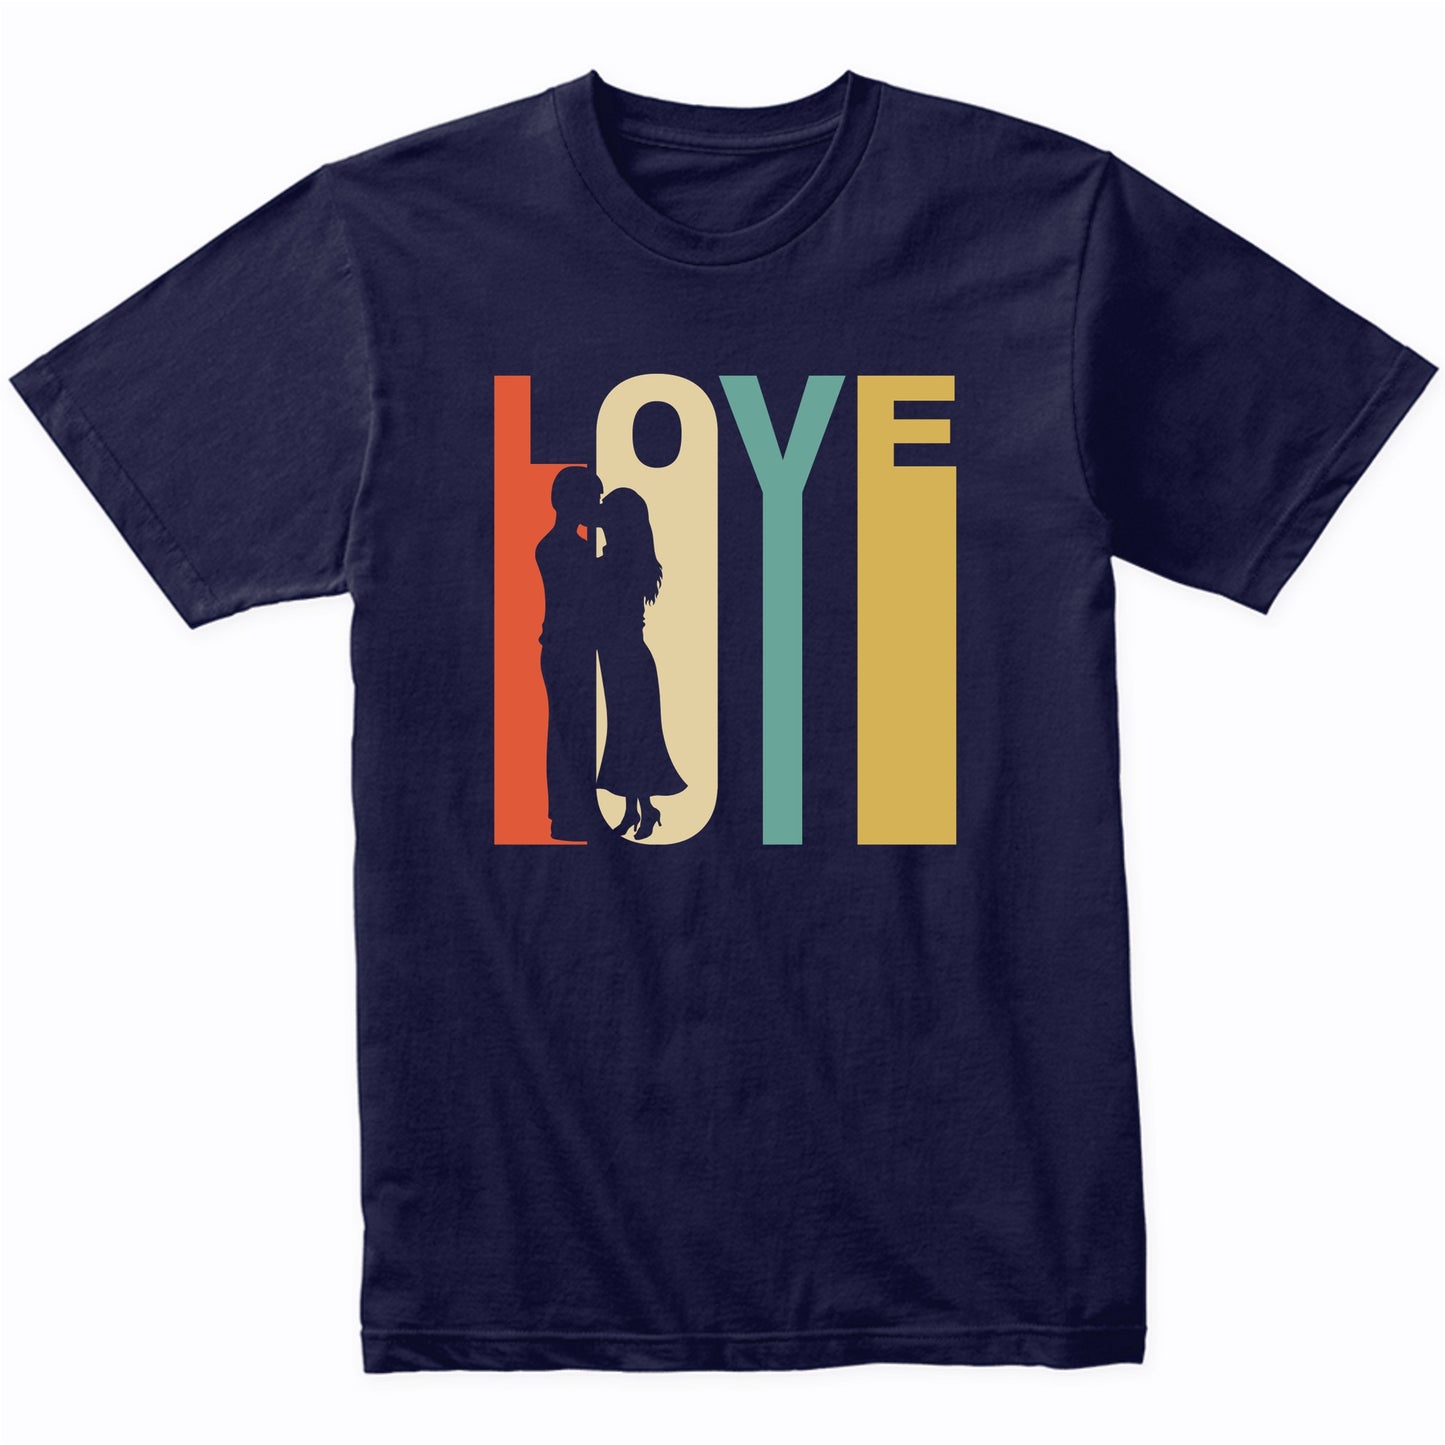 Retro 1970's Style Couple Kissing Silhouette Love T-Shirt